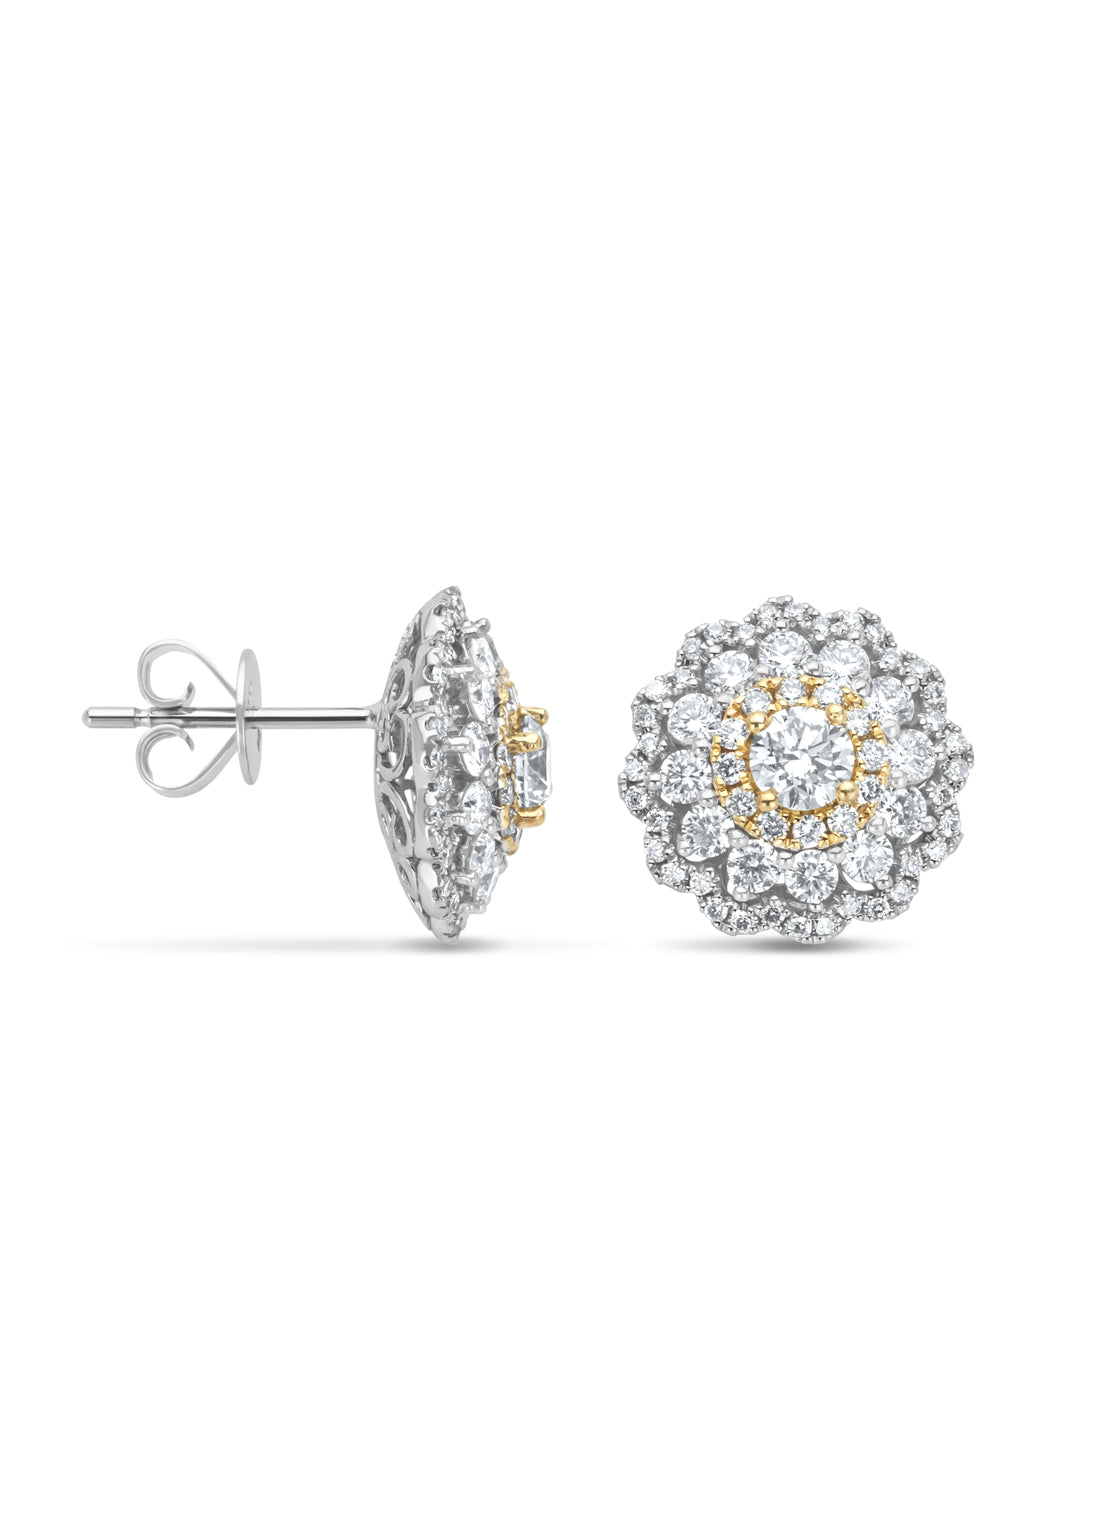 White gold ear jewelry, 2.18 ct diamond, gallery